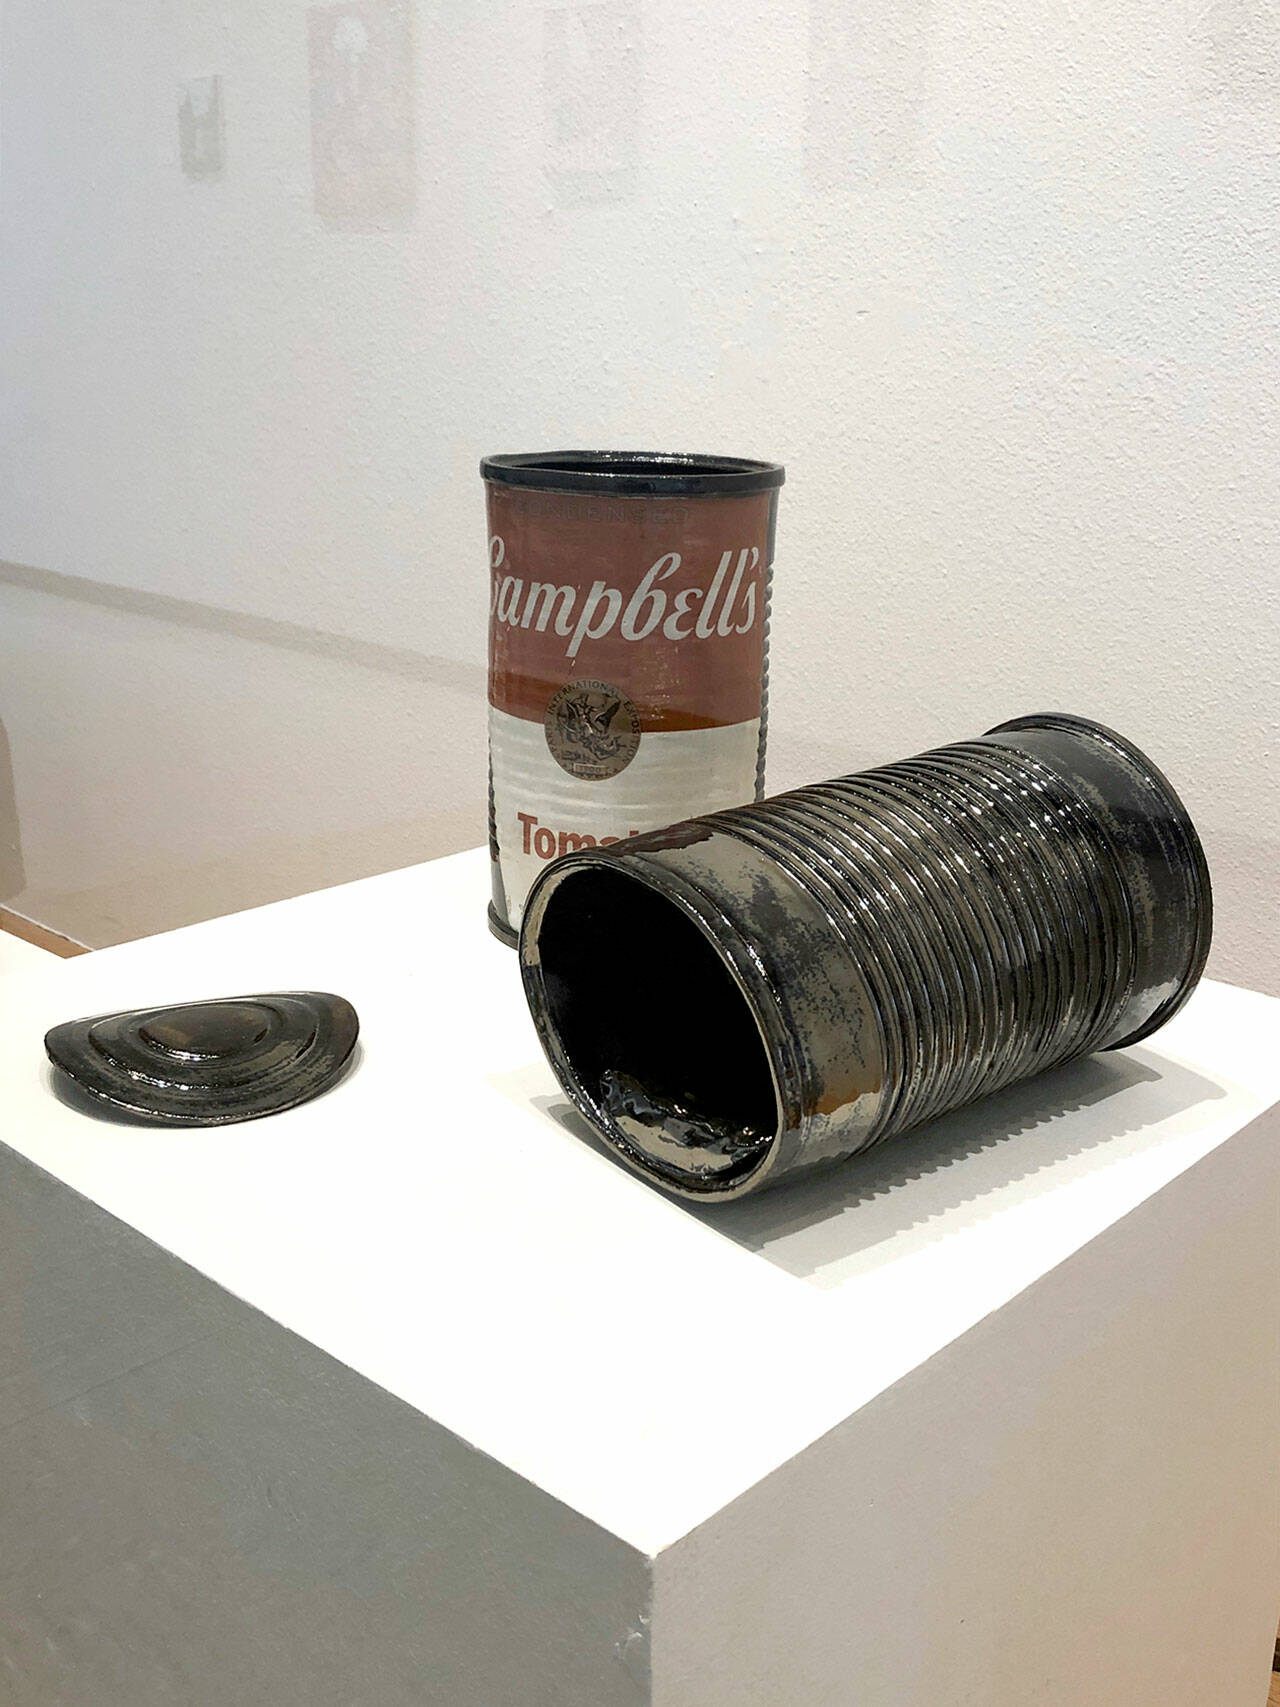 Kim Wimer’s sculpture “Warhol’s Studio Recycling” earned best in show.